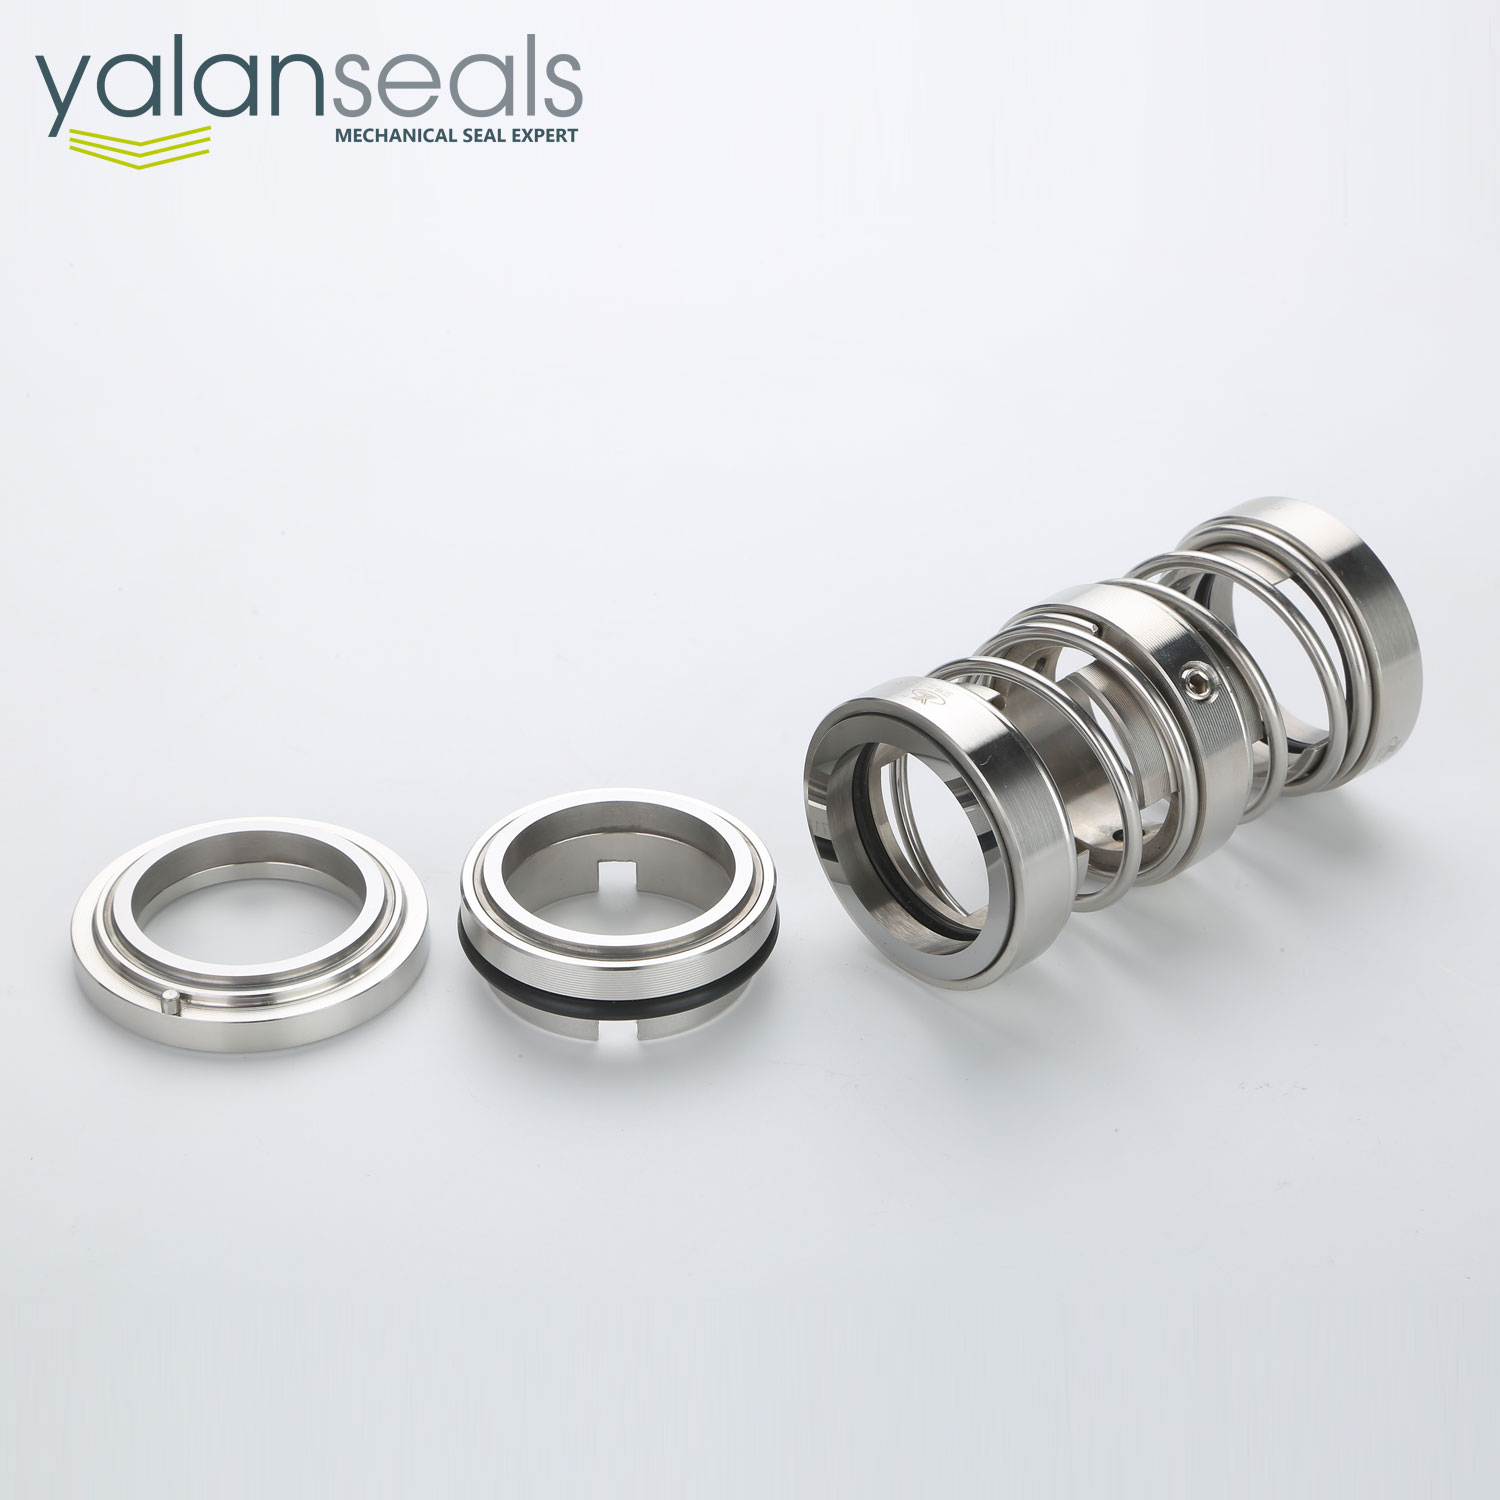 YALAN U208 Single Spring Double Mechanical Seal for Food Biochemical Process Pumps